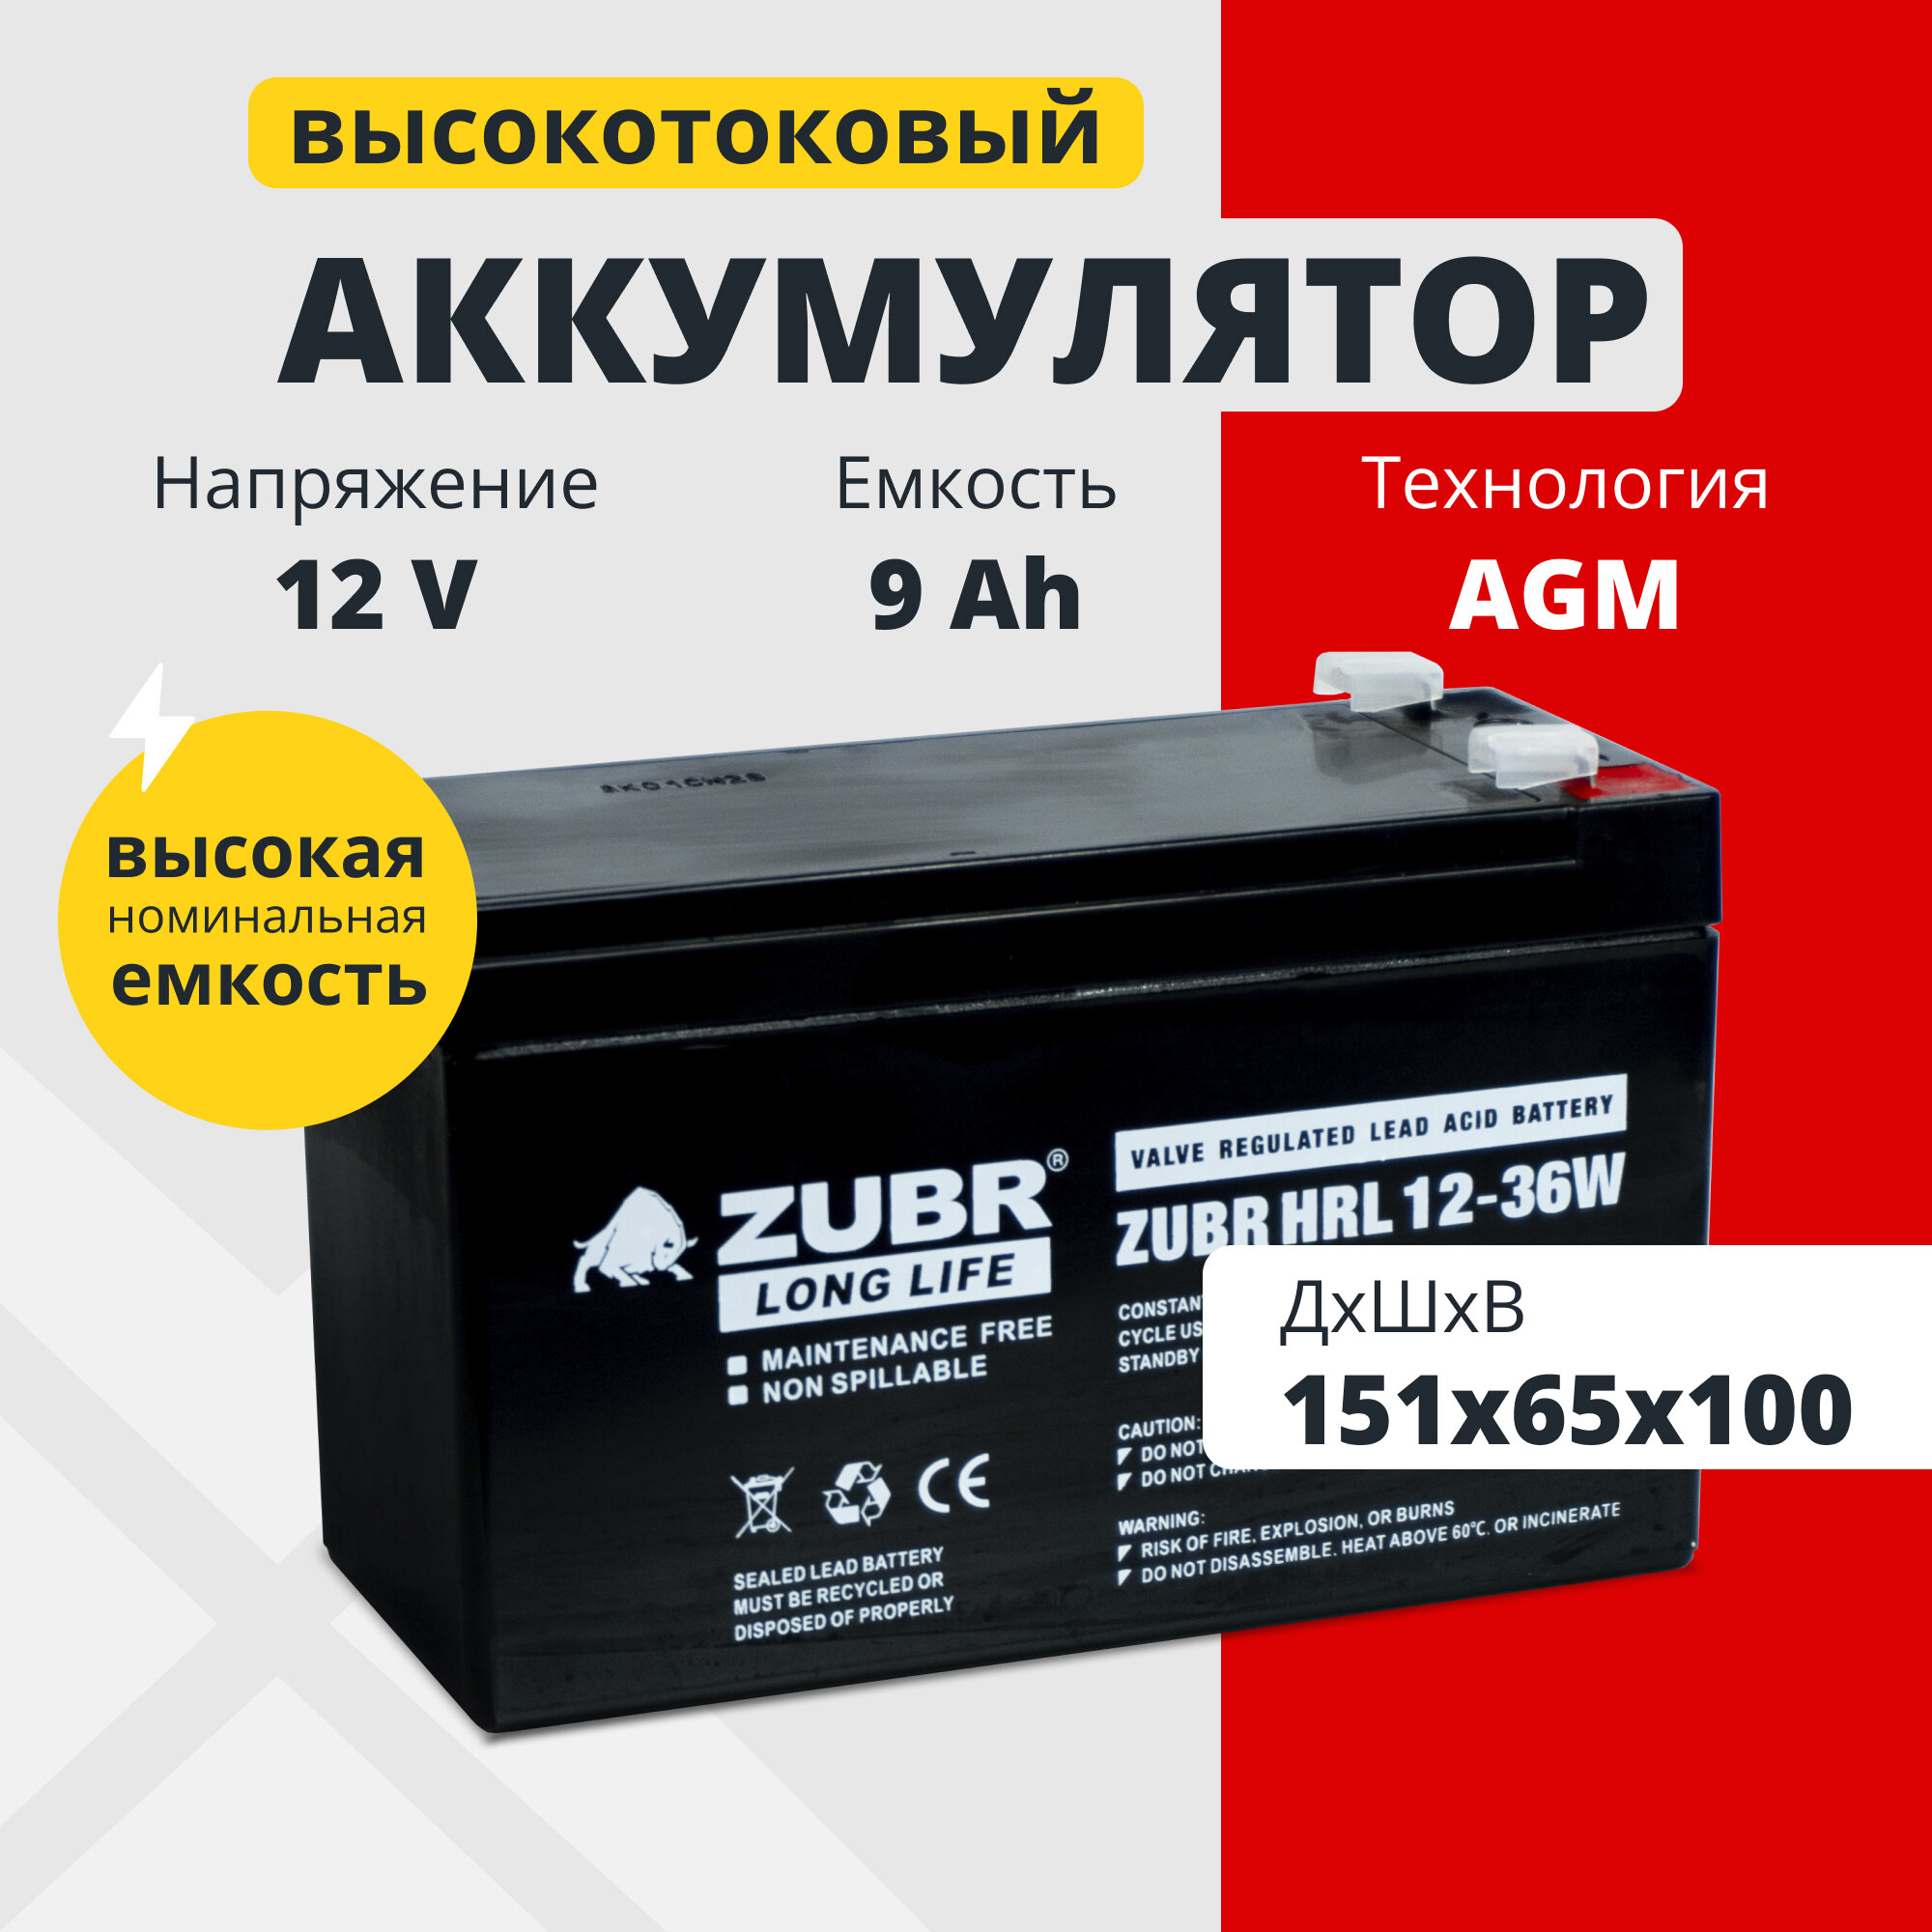 Аккумулятор для ибп 12v 9Ah ZUBR AGM F2/T2 акб видеонаблюдения эхолота 151x65x100 мм